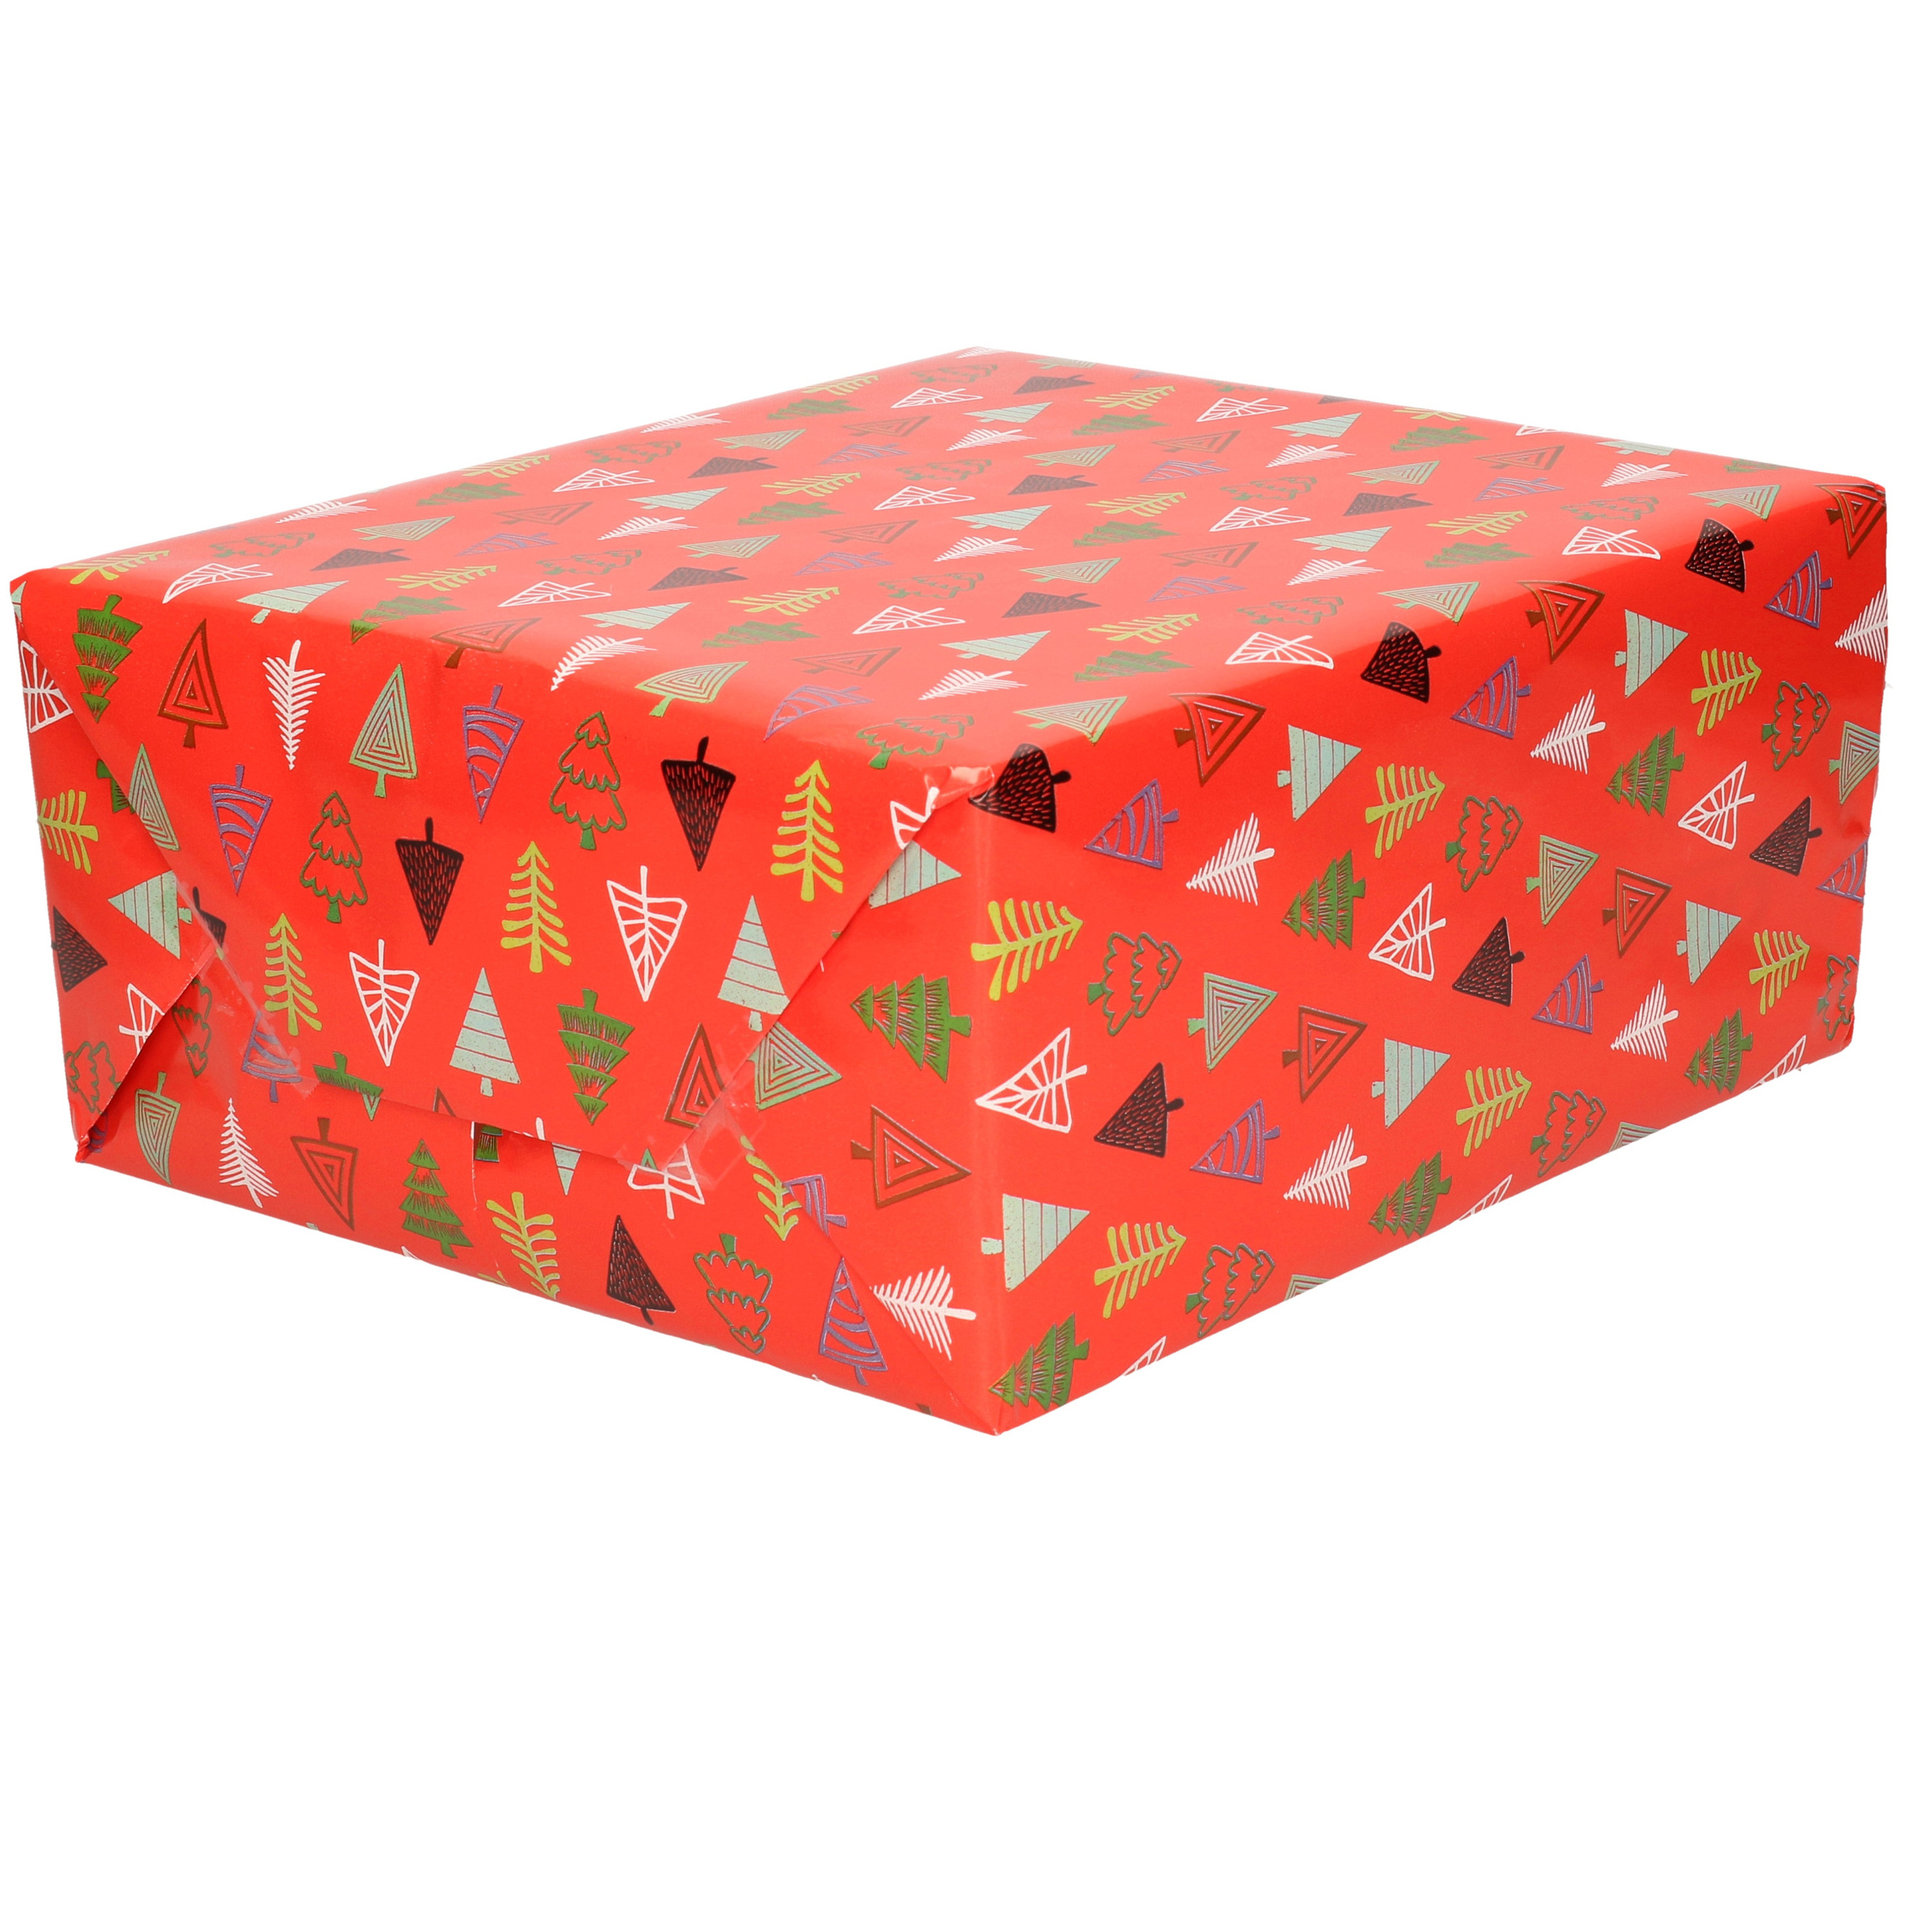 1x Rollen Kerst kadopapier print rood  2,5 x 0,7 meter op rol 70 grams - Luxe papier kwaliteit cadeaupapier/inpakpapier - Kerstmis